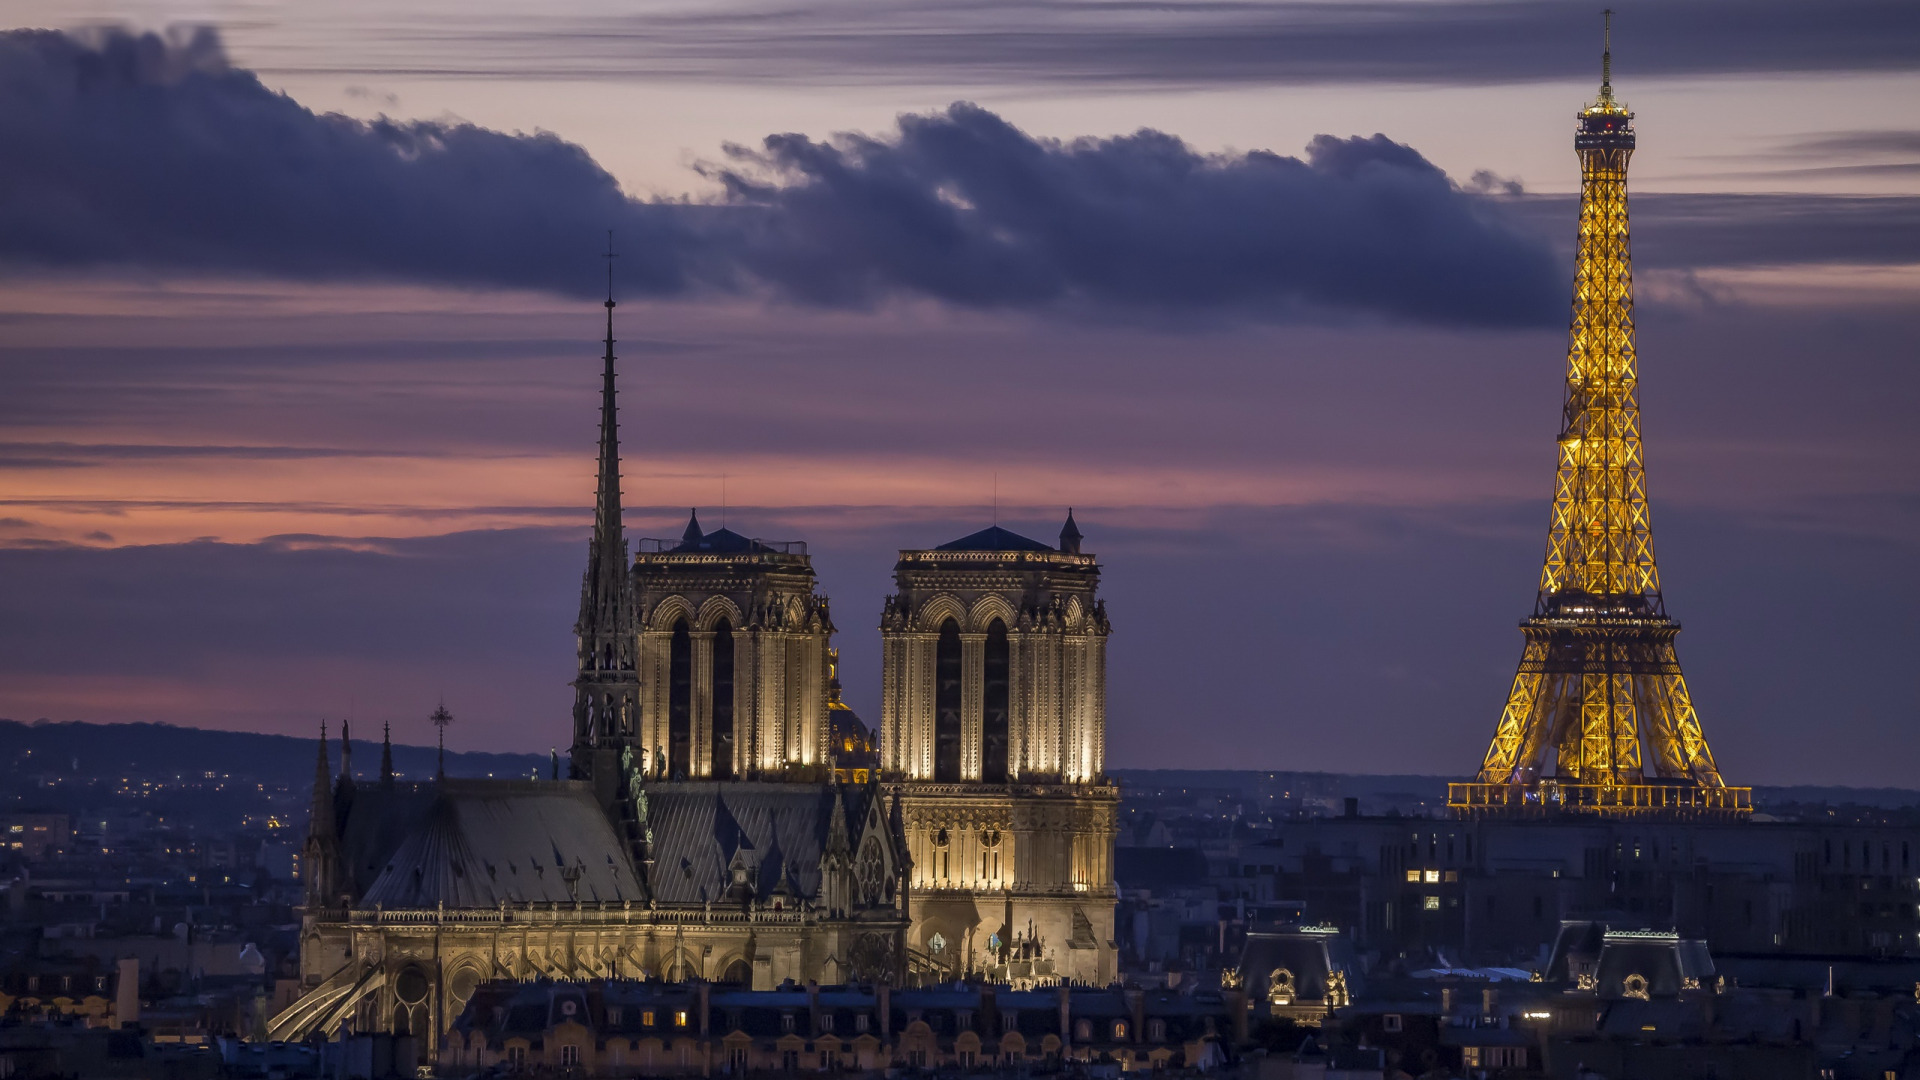 Architecture Building House Paris Eiffel Tower Clouds Evening Sunset Notre Dame Cathedral Capital Fr 1920x1080